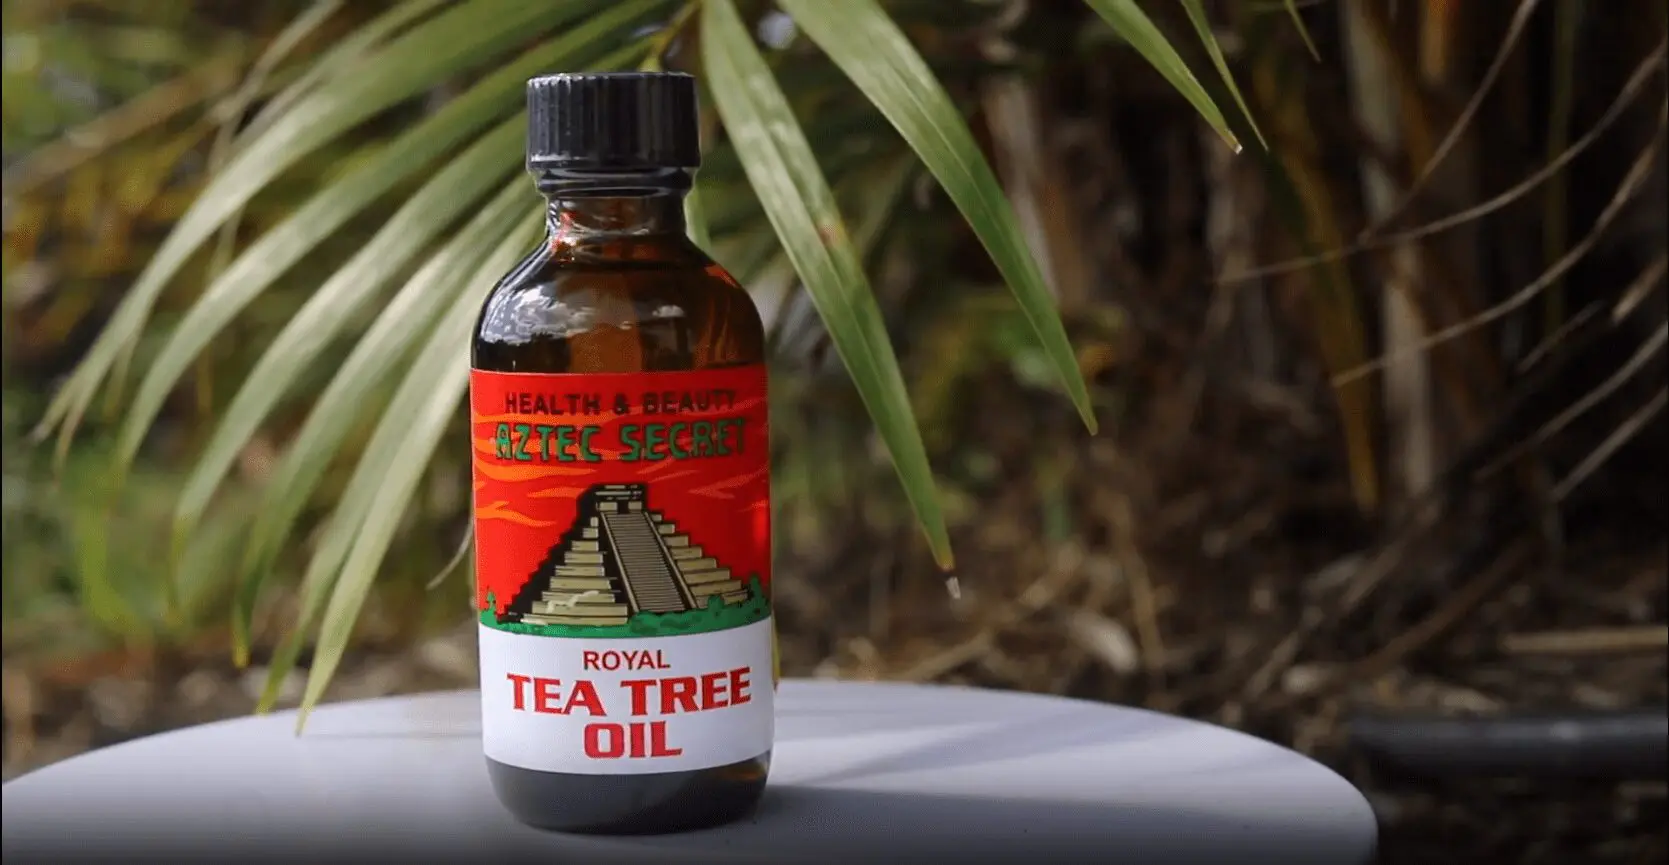 Royal Tea tree Oil | Aztec Secrete Health and beauty